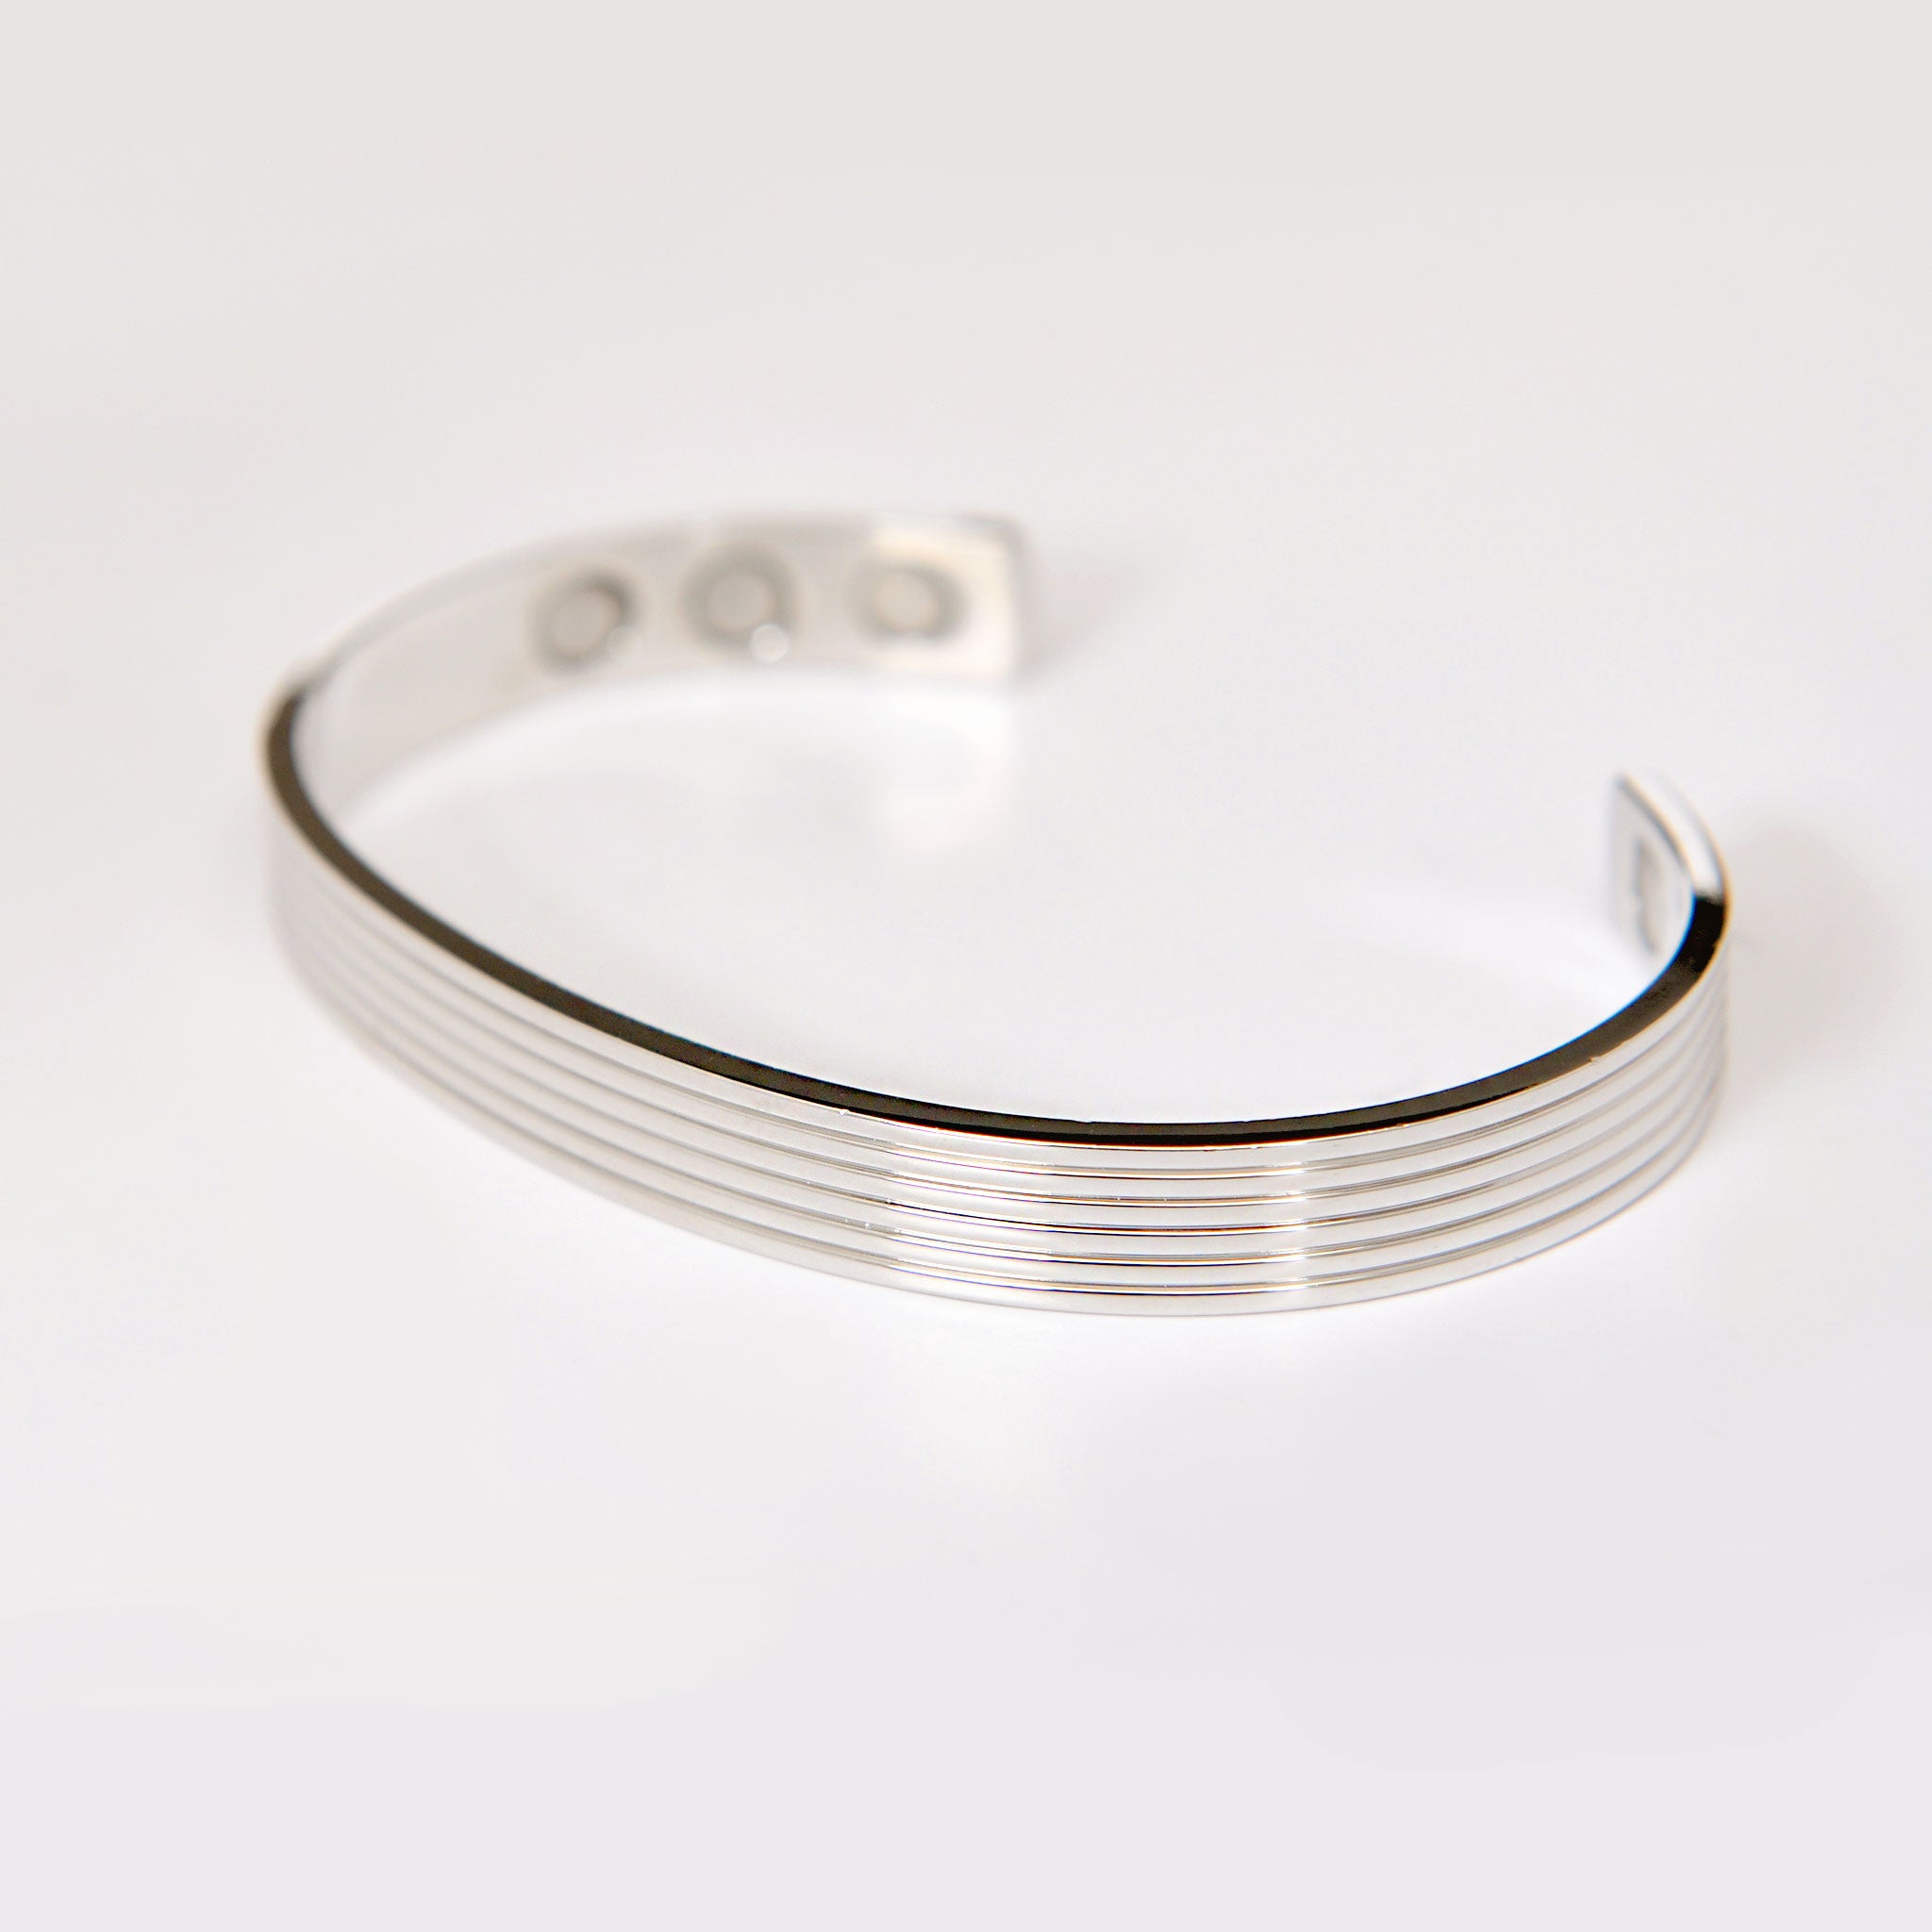 magnetic bracelet for ladies